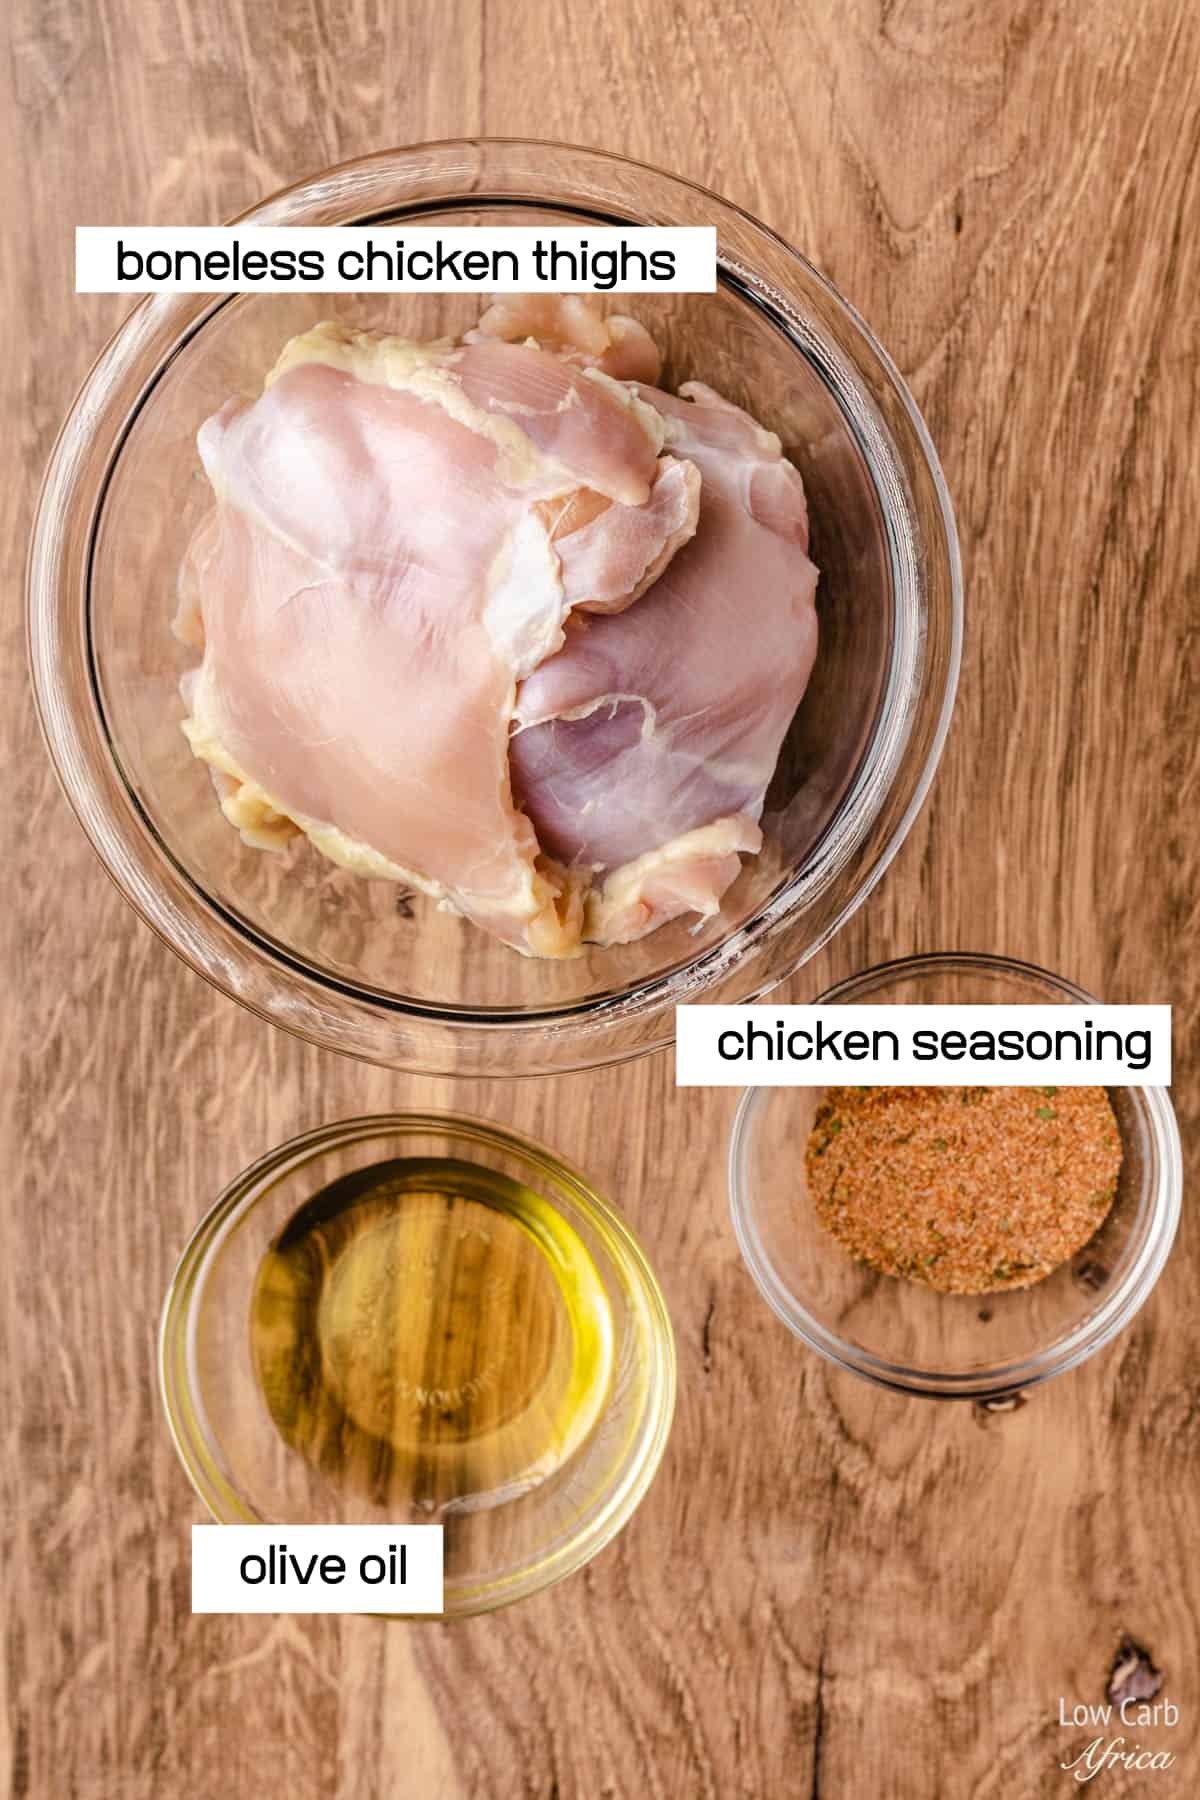 Boneless chicken thigh, seasoning, olive oil